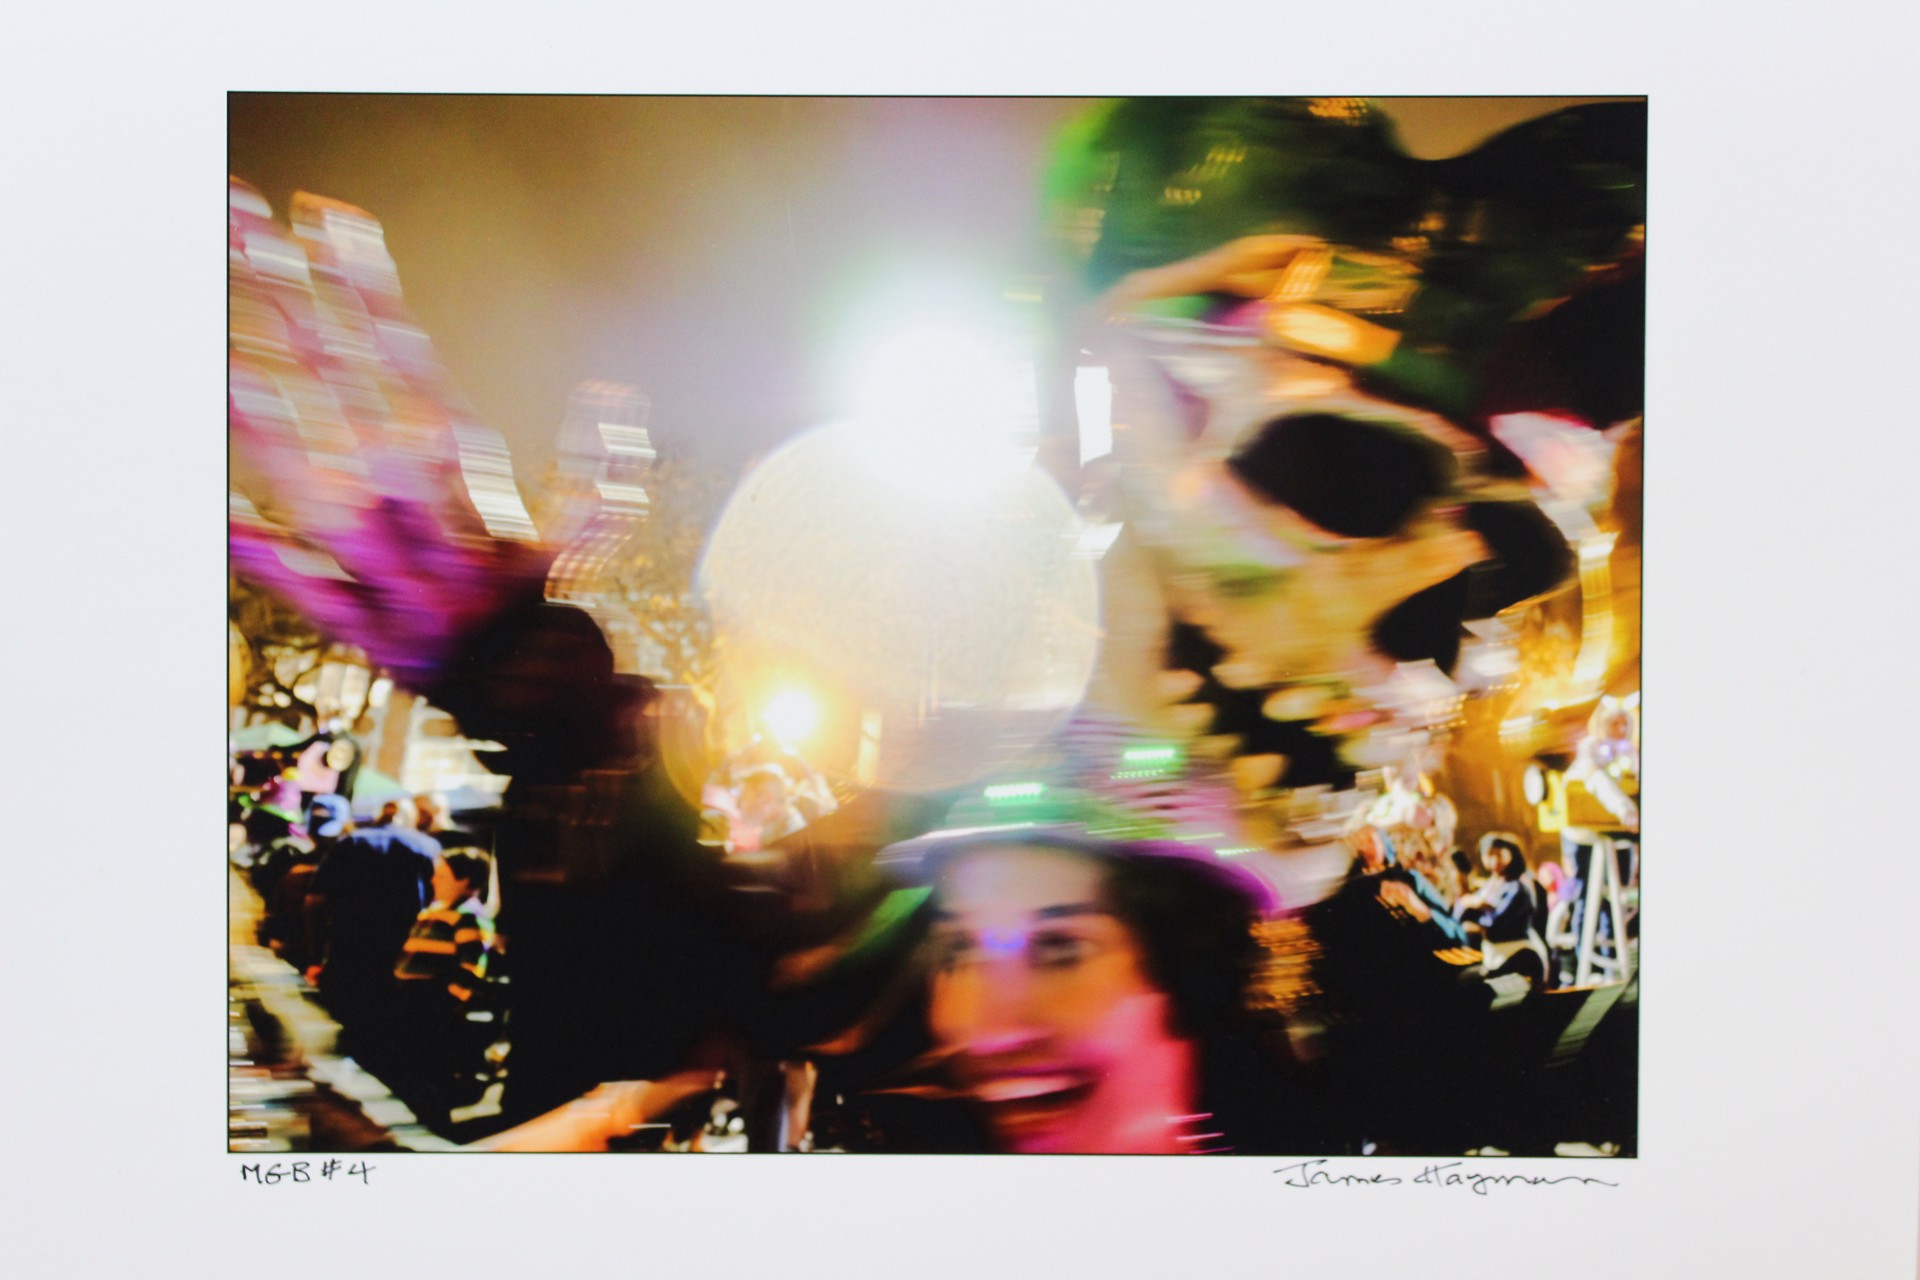 Mardi Gras Blur #4 (open edition) by James Hayman